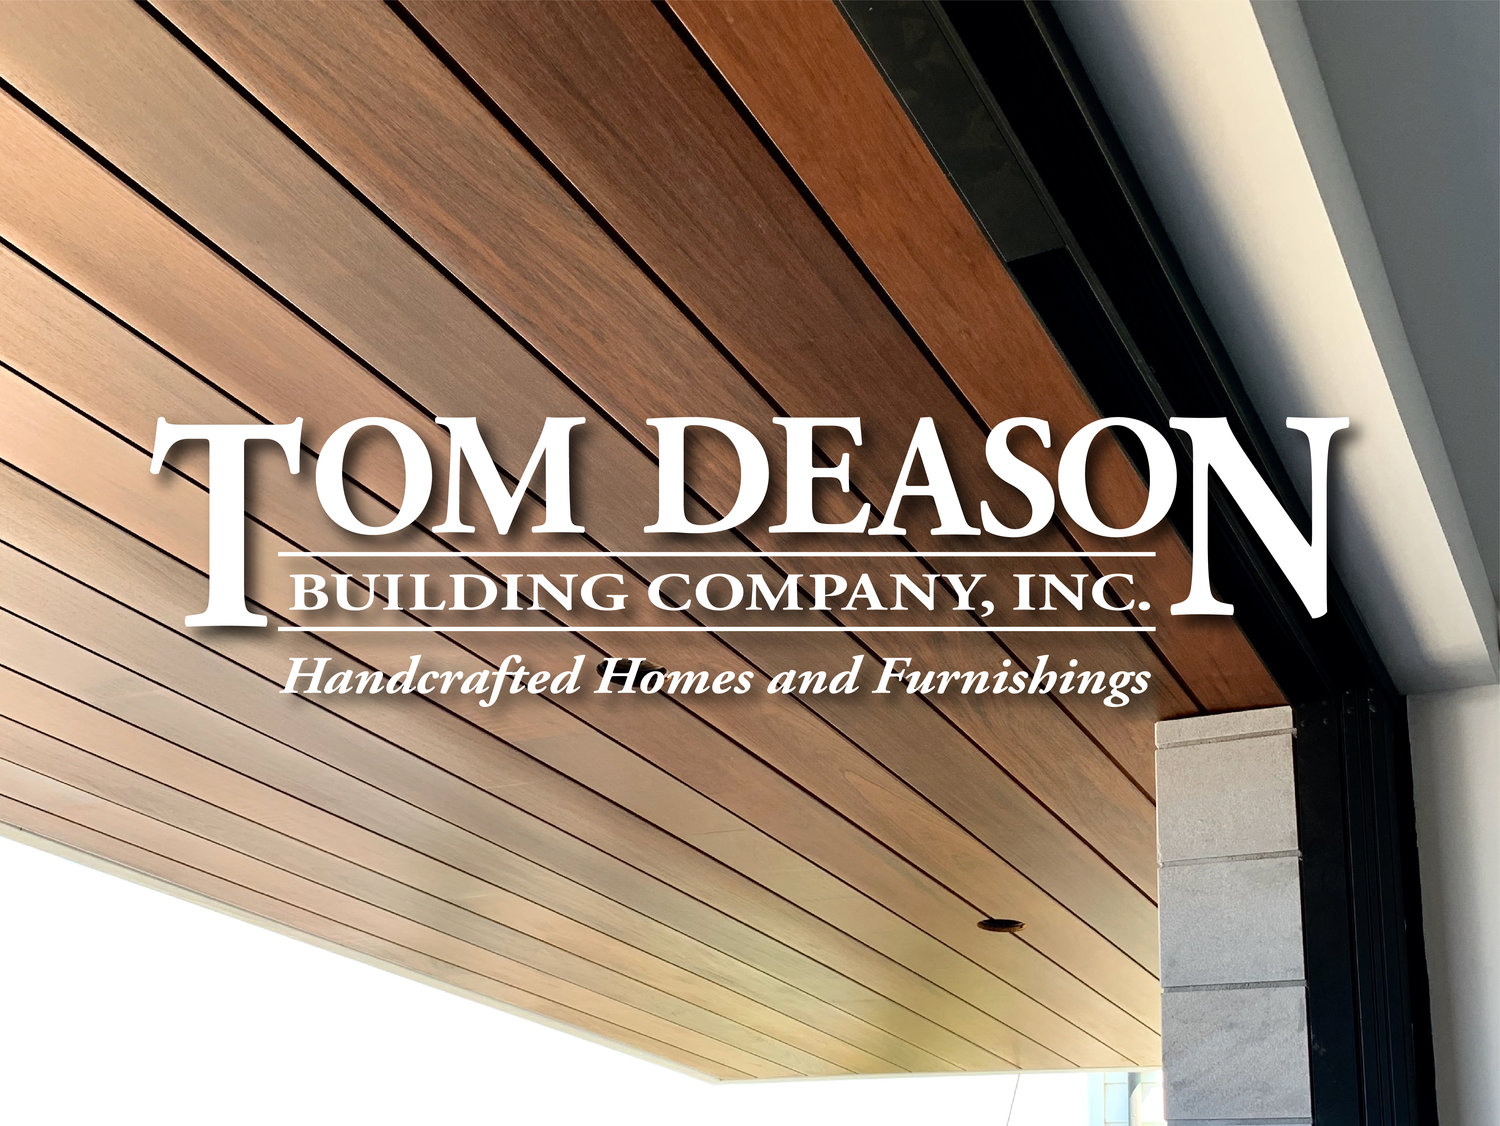 Tom Deason Building Company